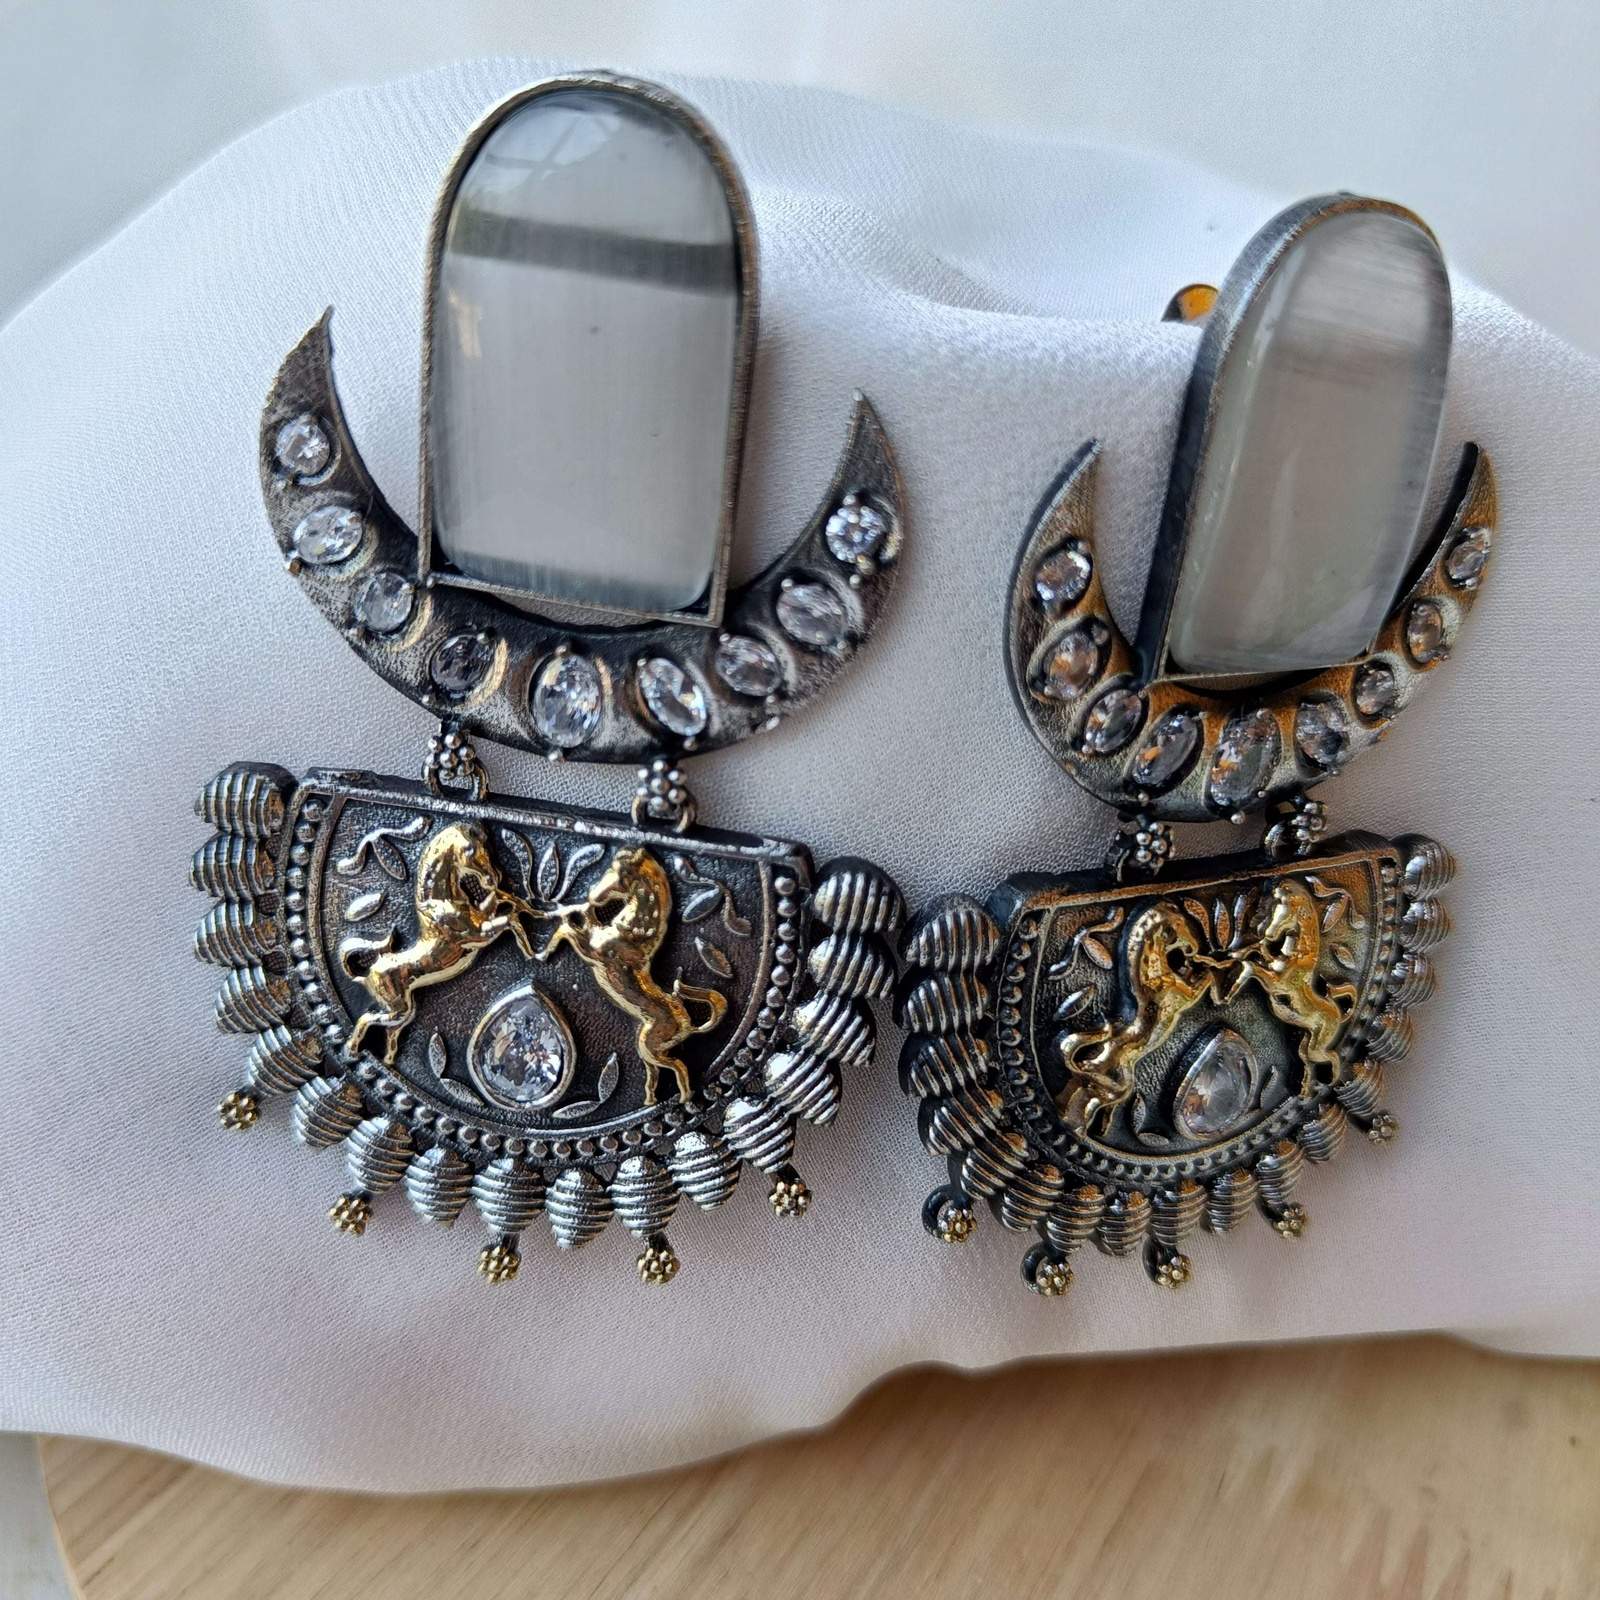 Oxidized Chand earrings